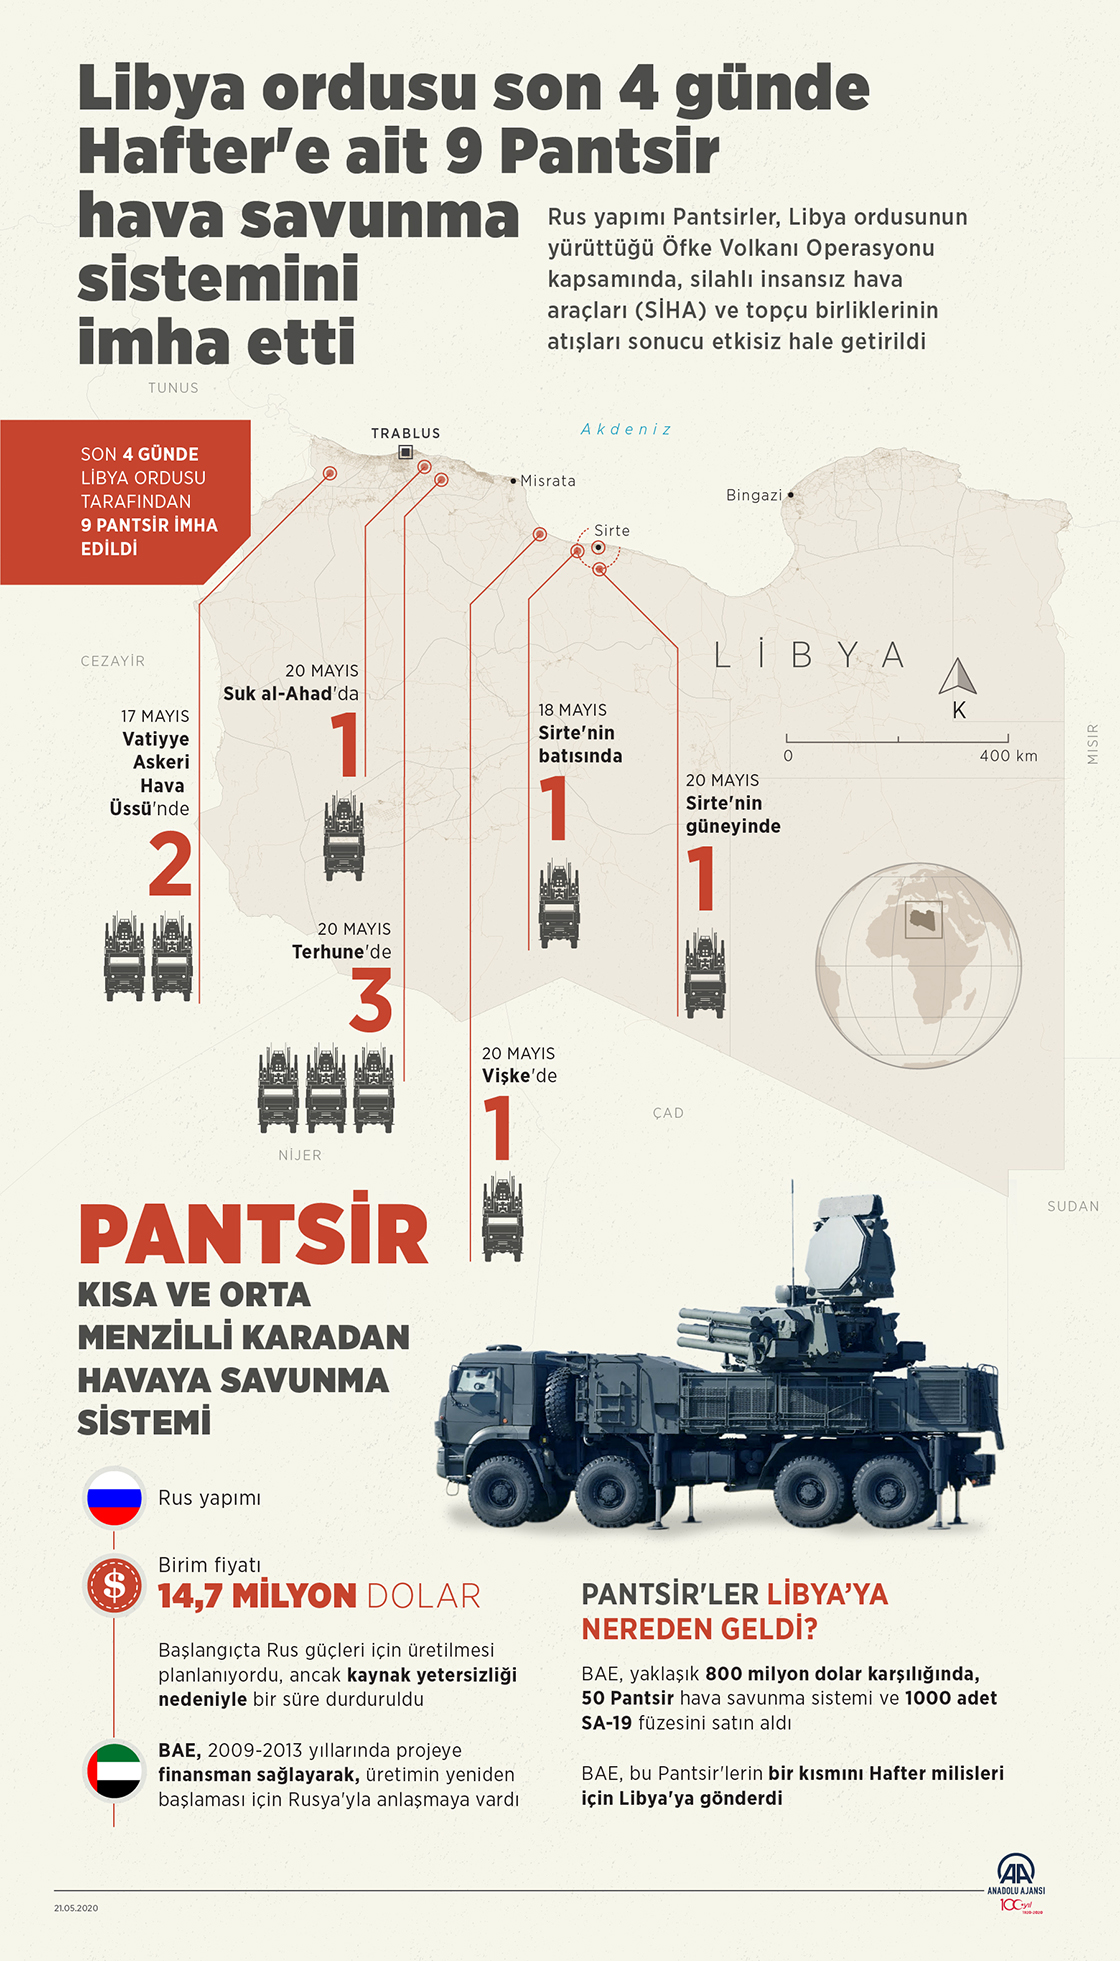 Libya ordusu son 4 günde Hafter'e ait 9 Pantsir hava savunma sistemini imha etti